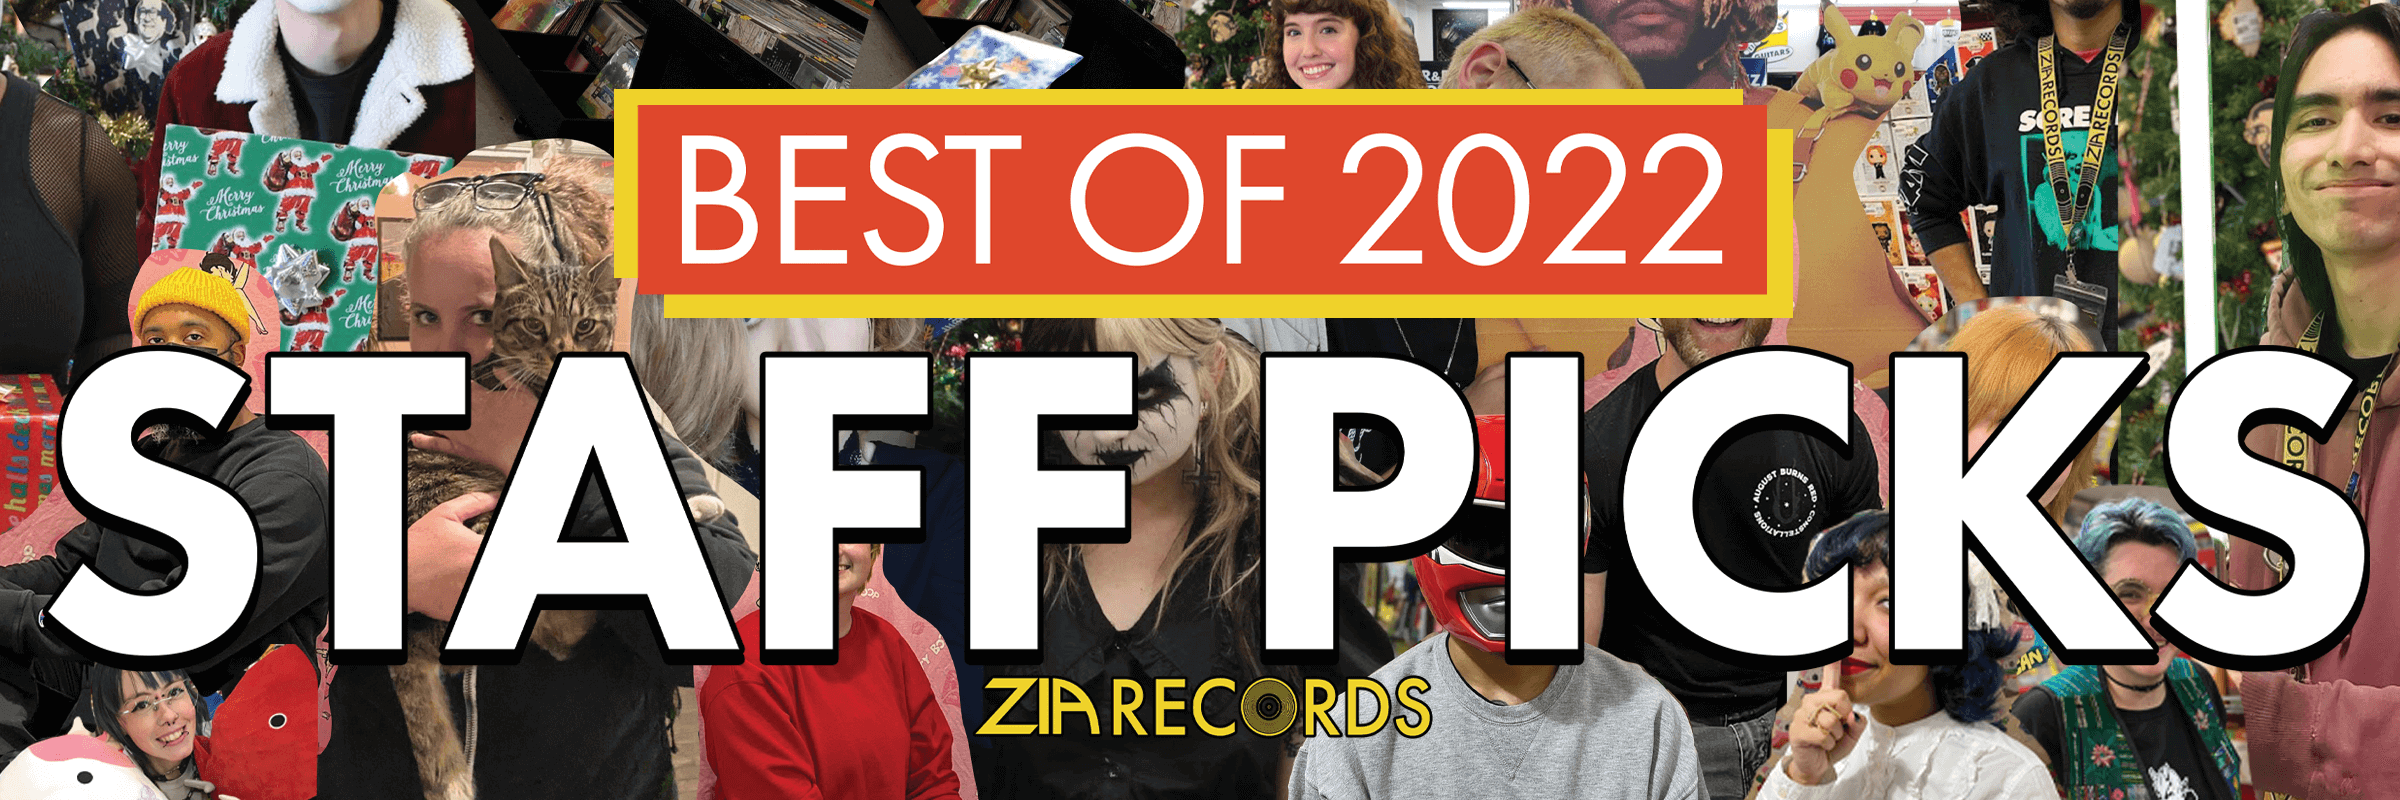 Zia Records Staff Picks Best of 2022